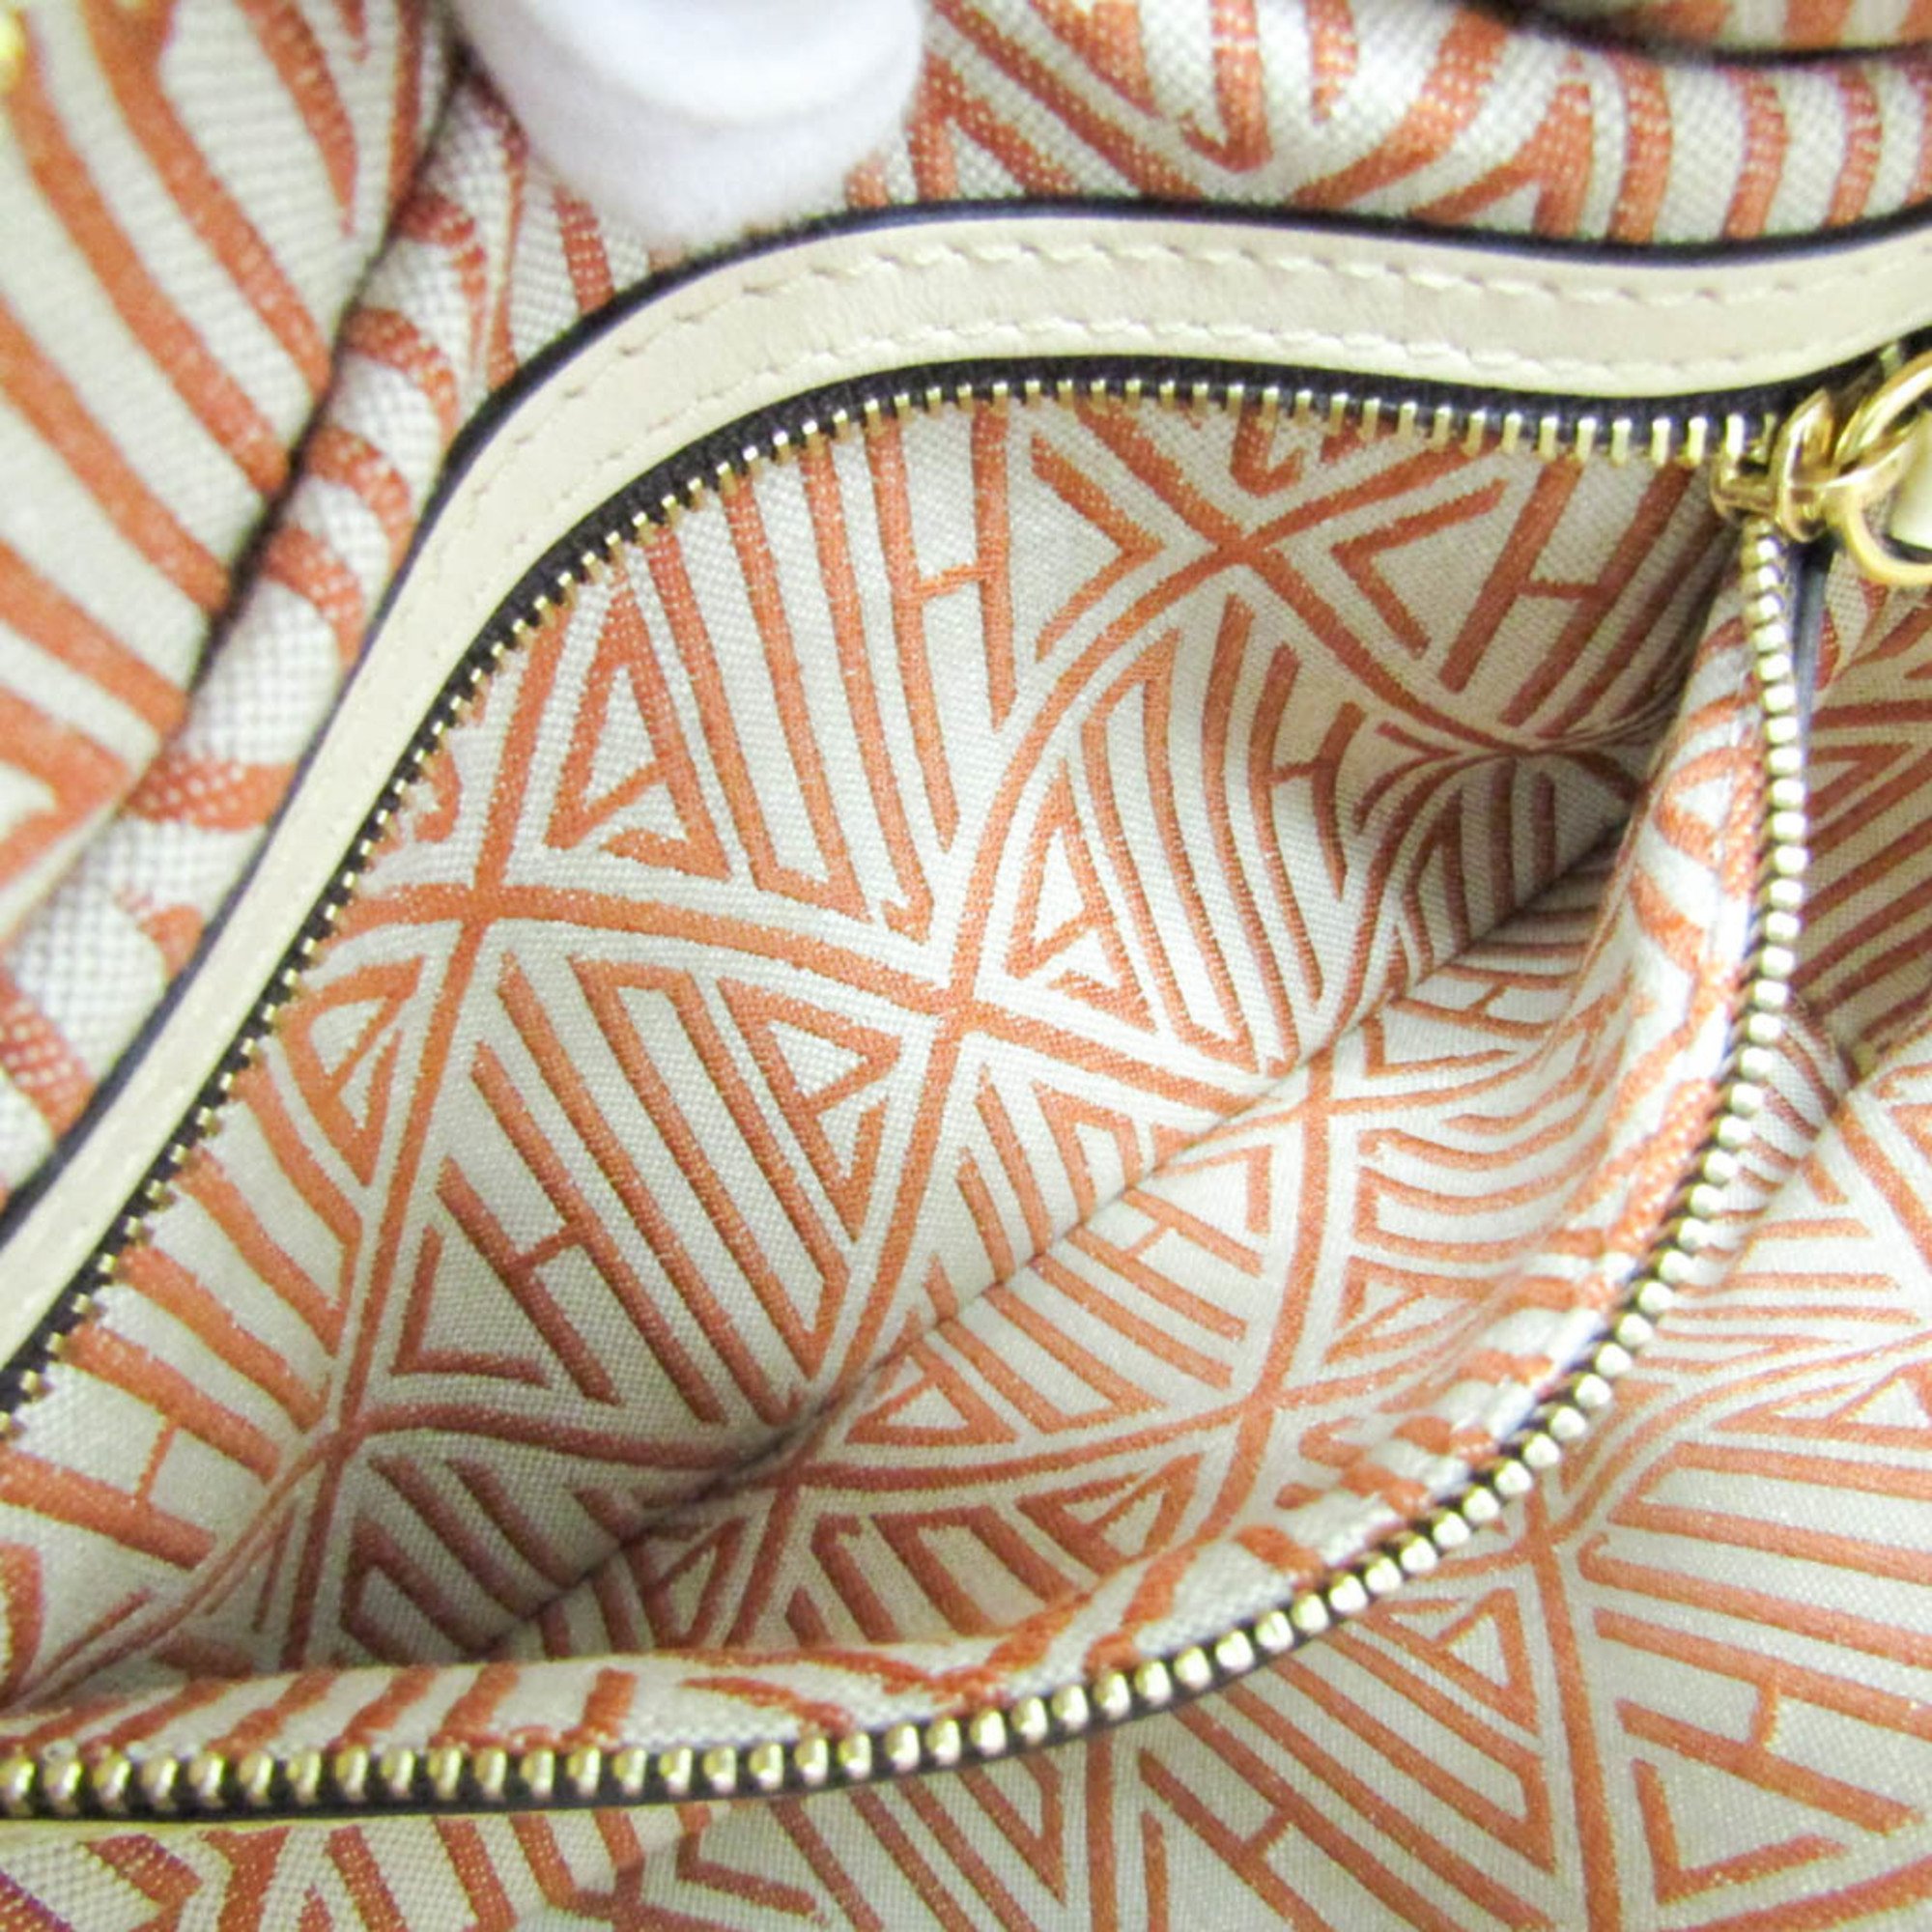 Chloé DARIA Small CHC20US361C62 Women's Leather Handbag,Shoulder Bag Light Beige